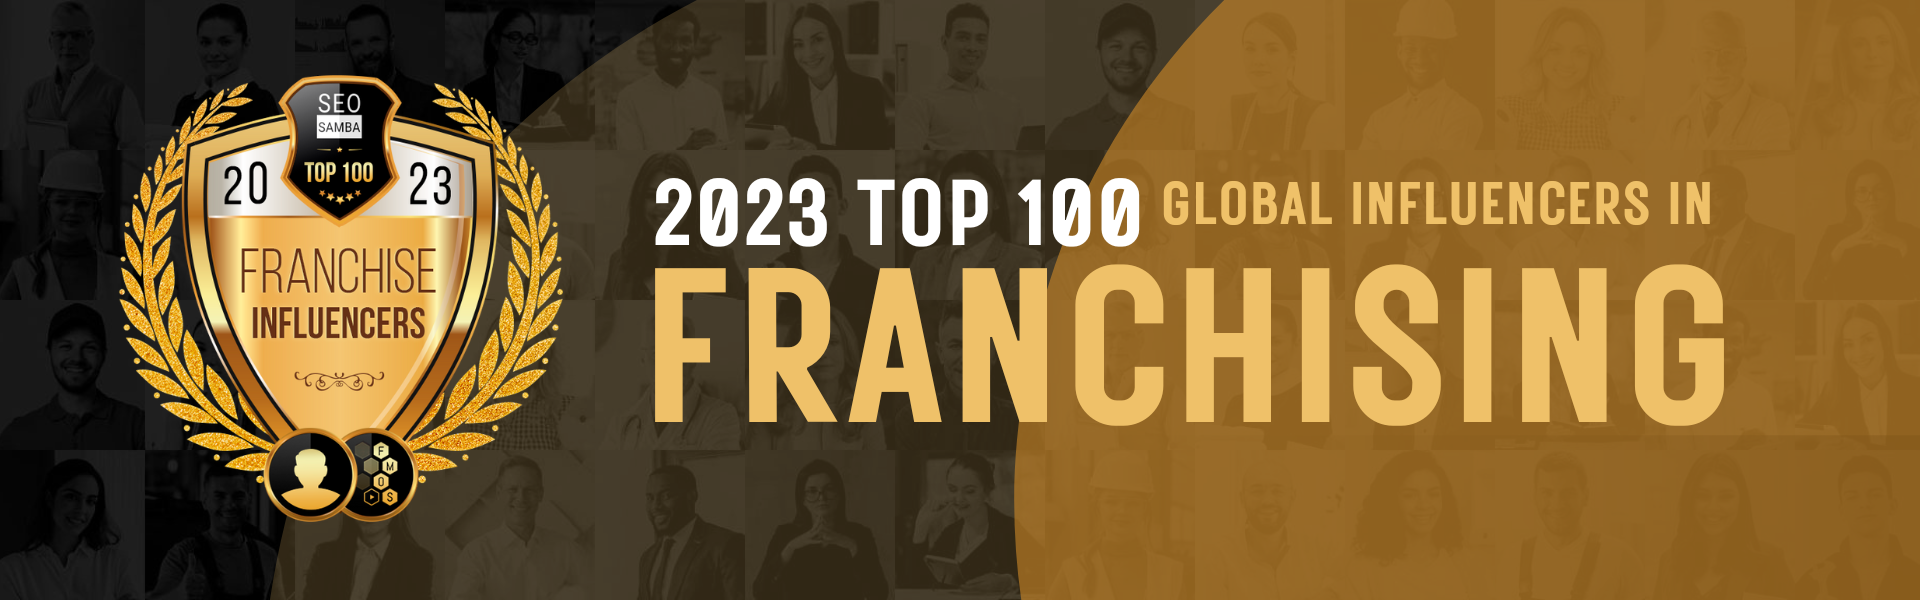 top-100-seosamba-s-2023-franchise-influencers-list